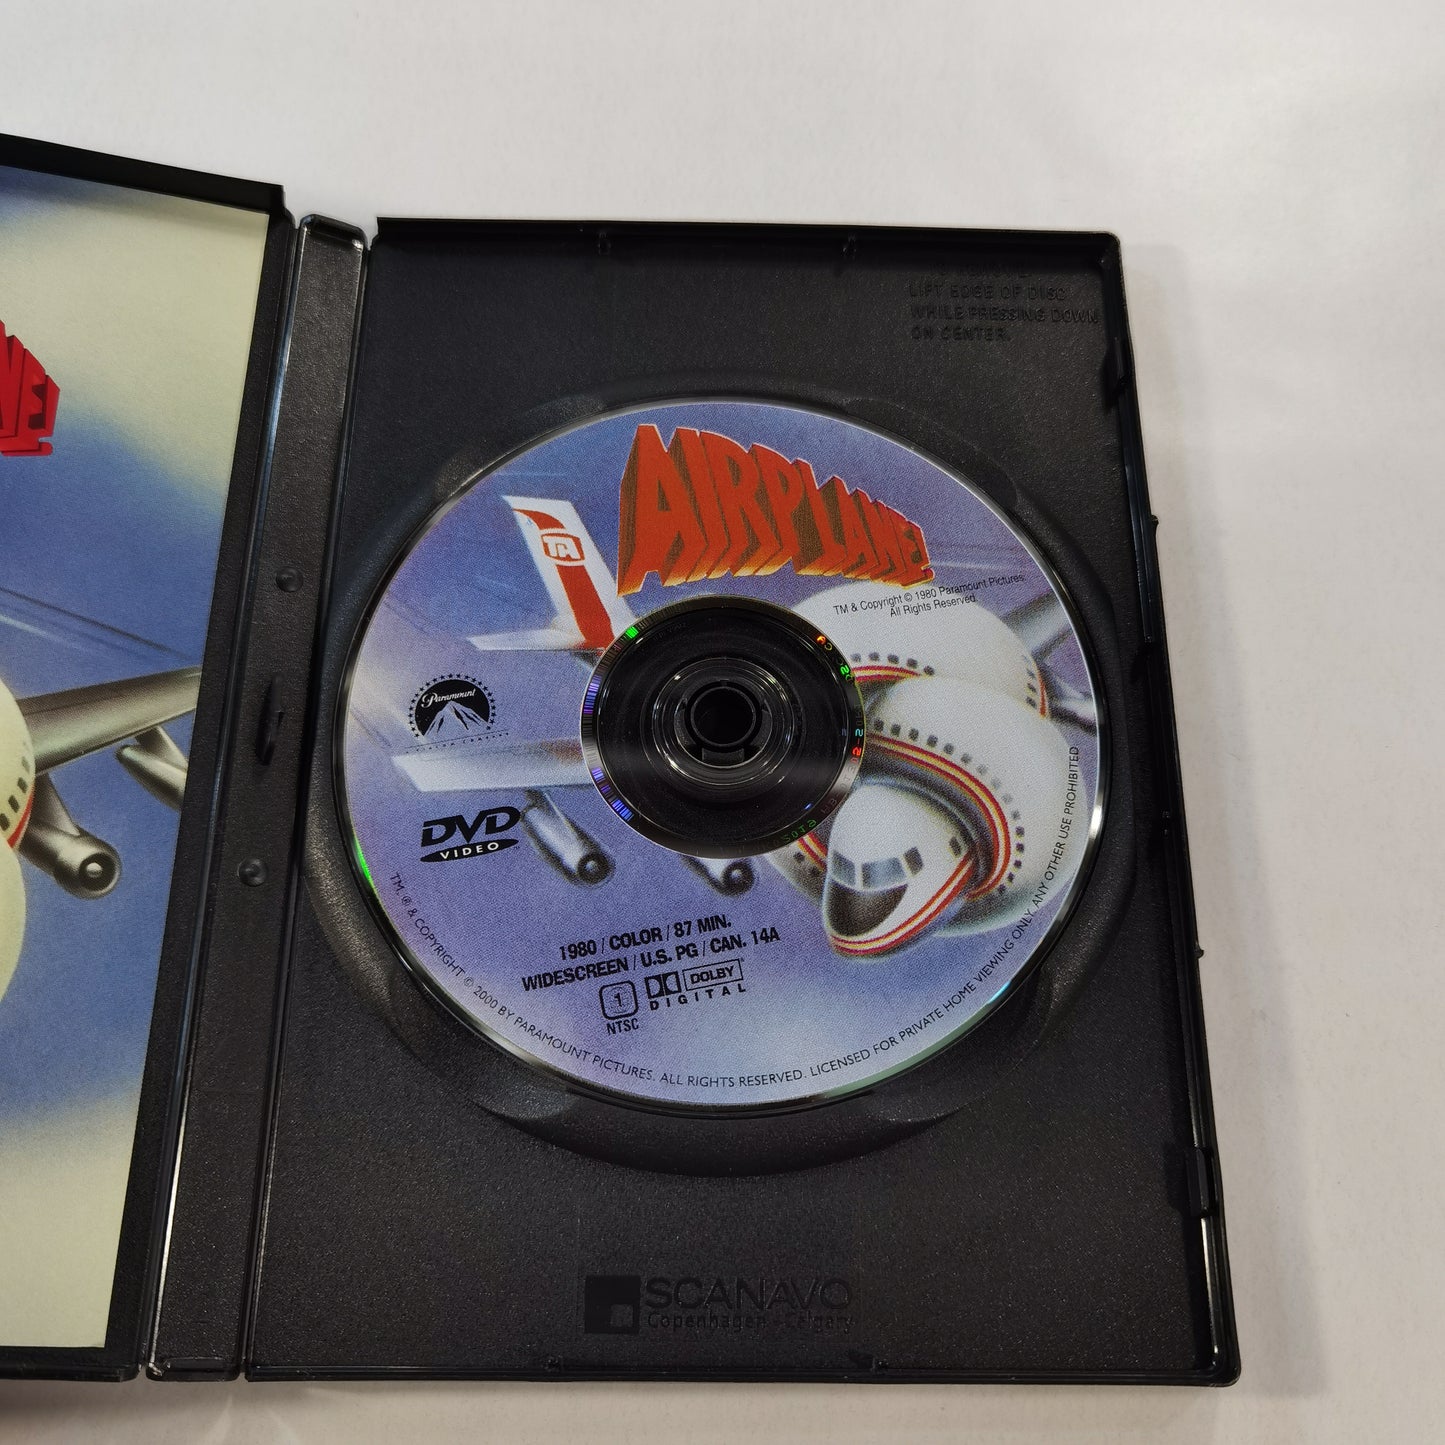 Airplane! (1980) - DVD US 2000